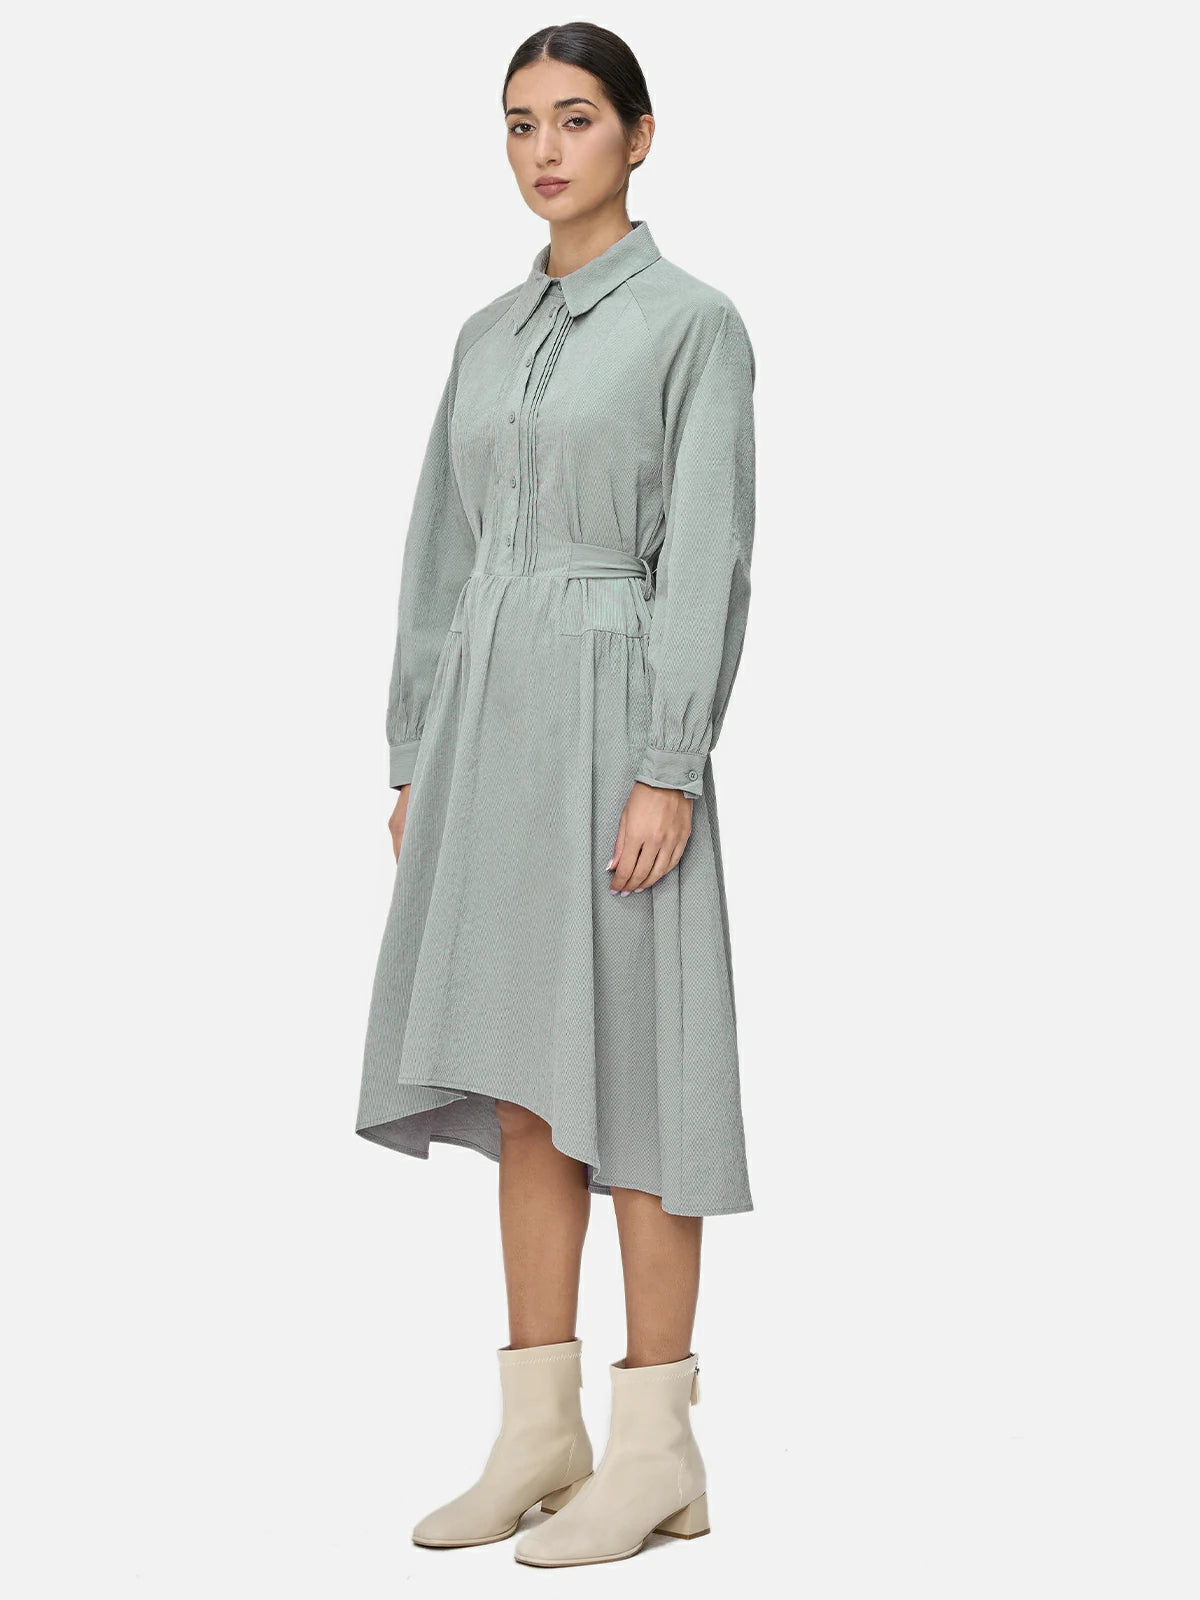 Elegant high-low hem dress for modern fashion